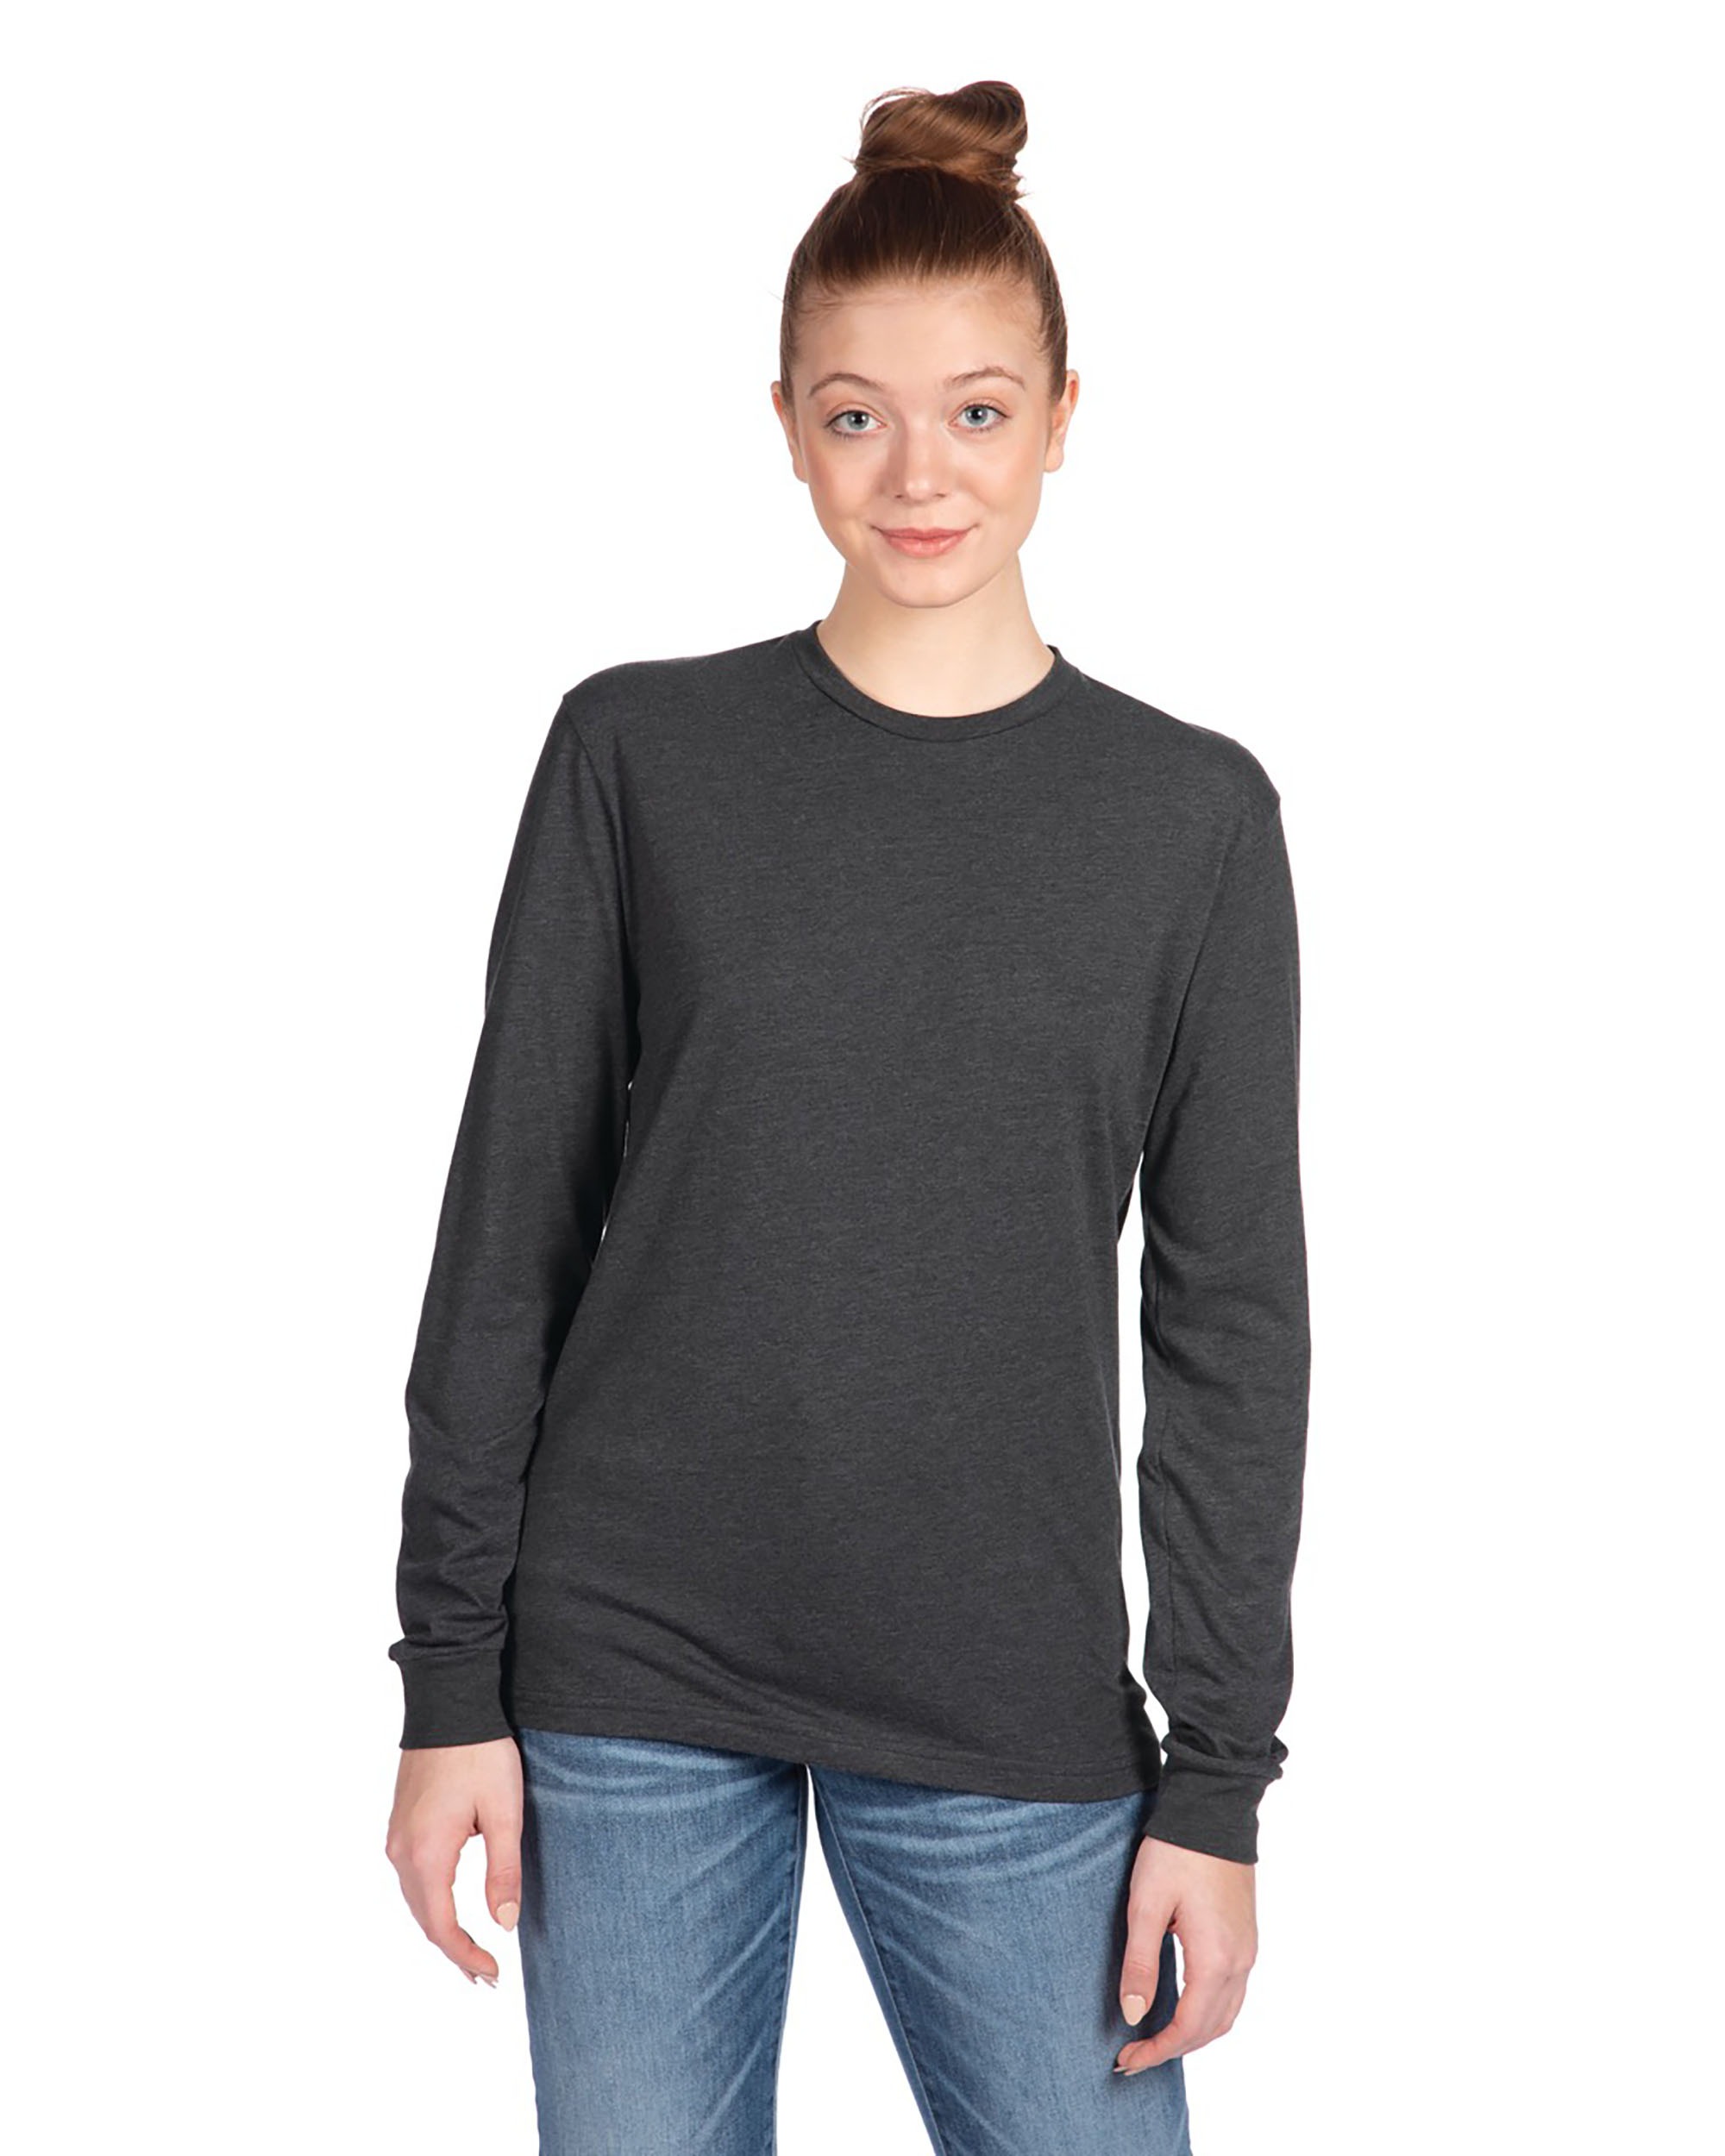 Next Level Apparel® 6211 Unisex CVC Long Sleeve T-Shirt